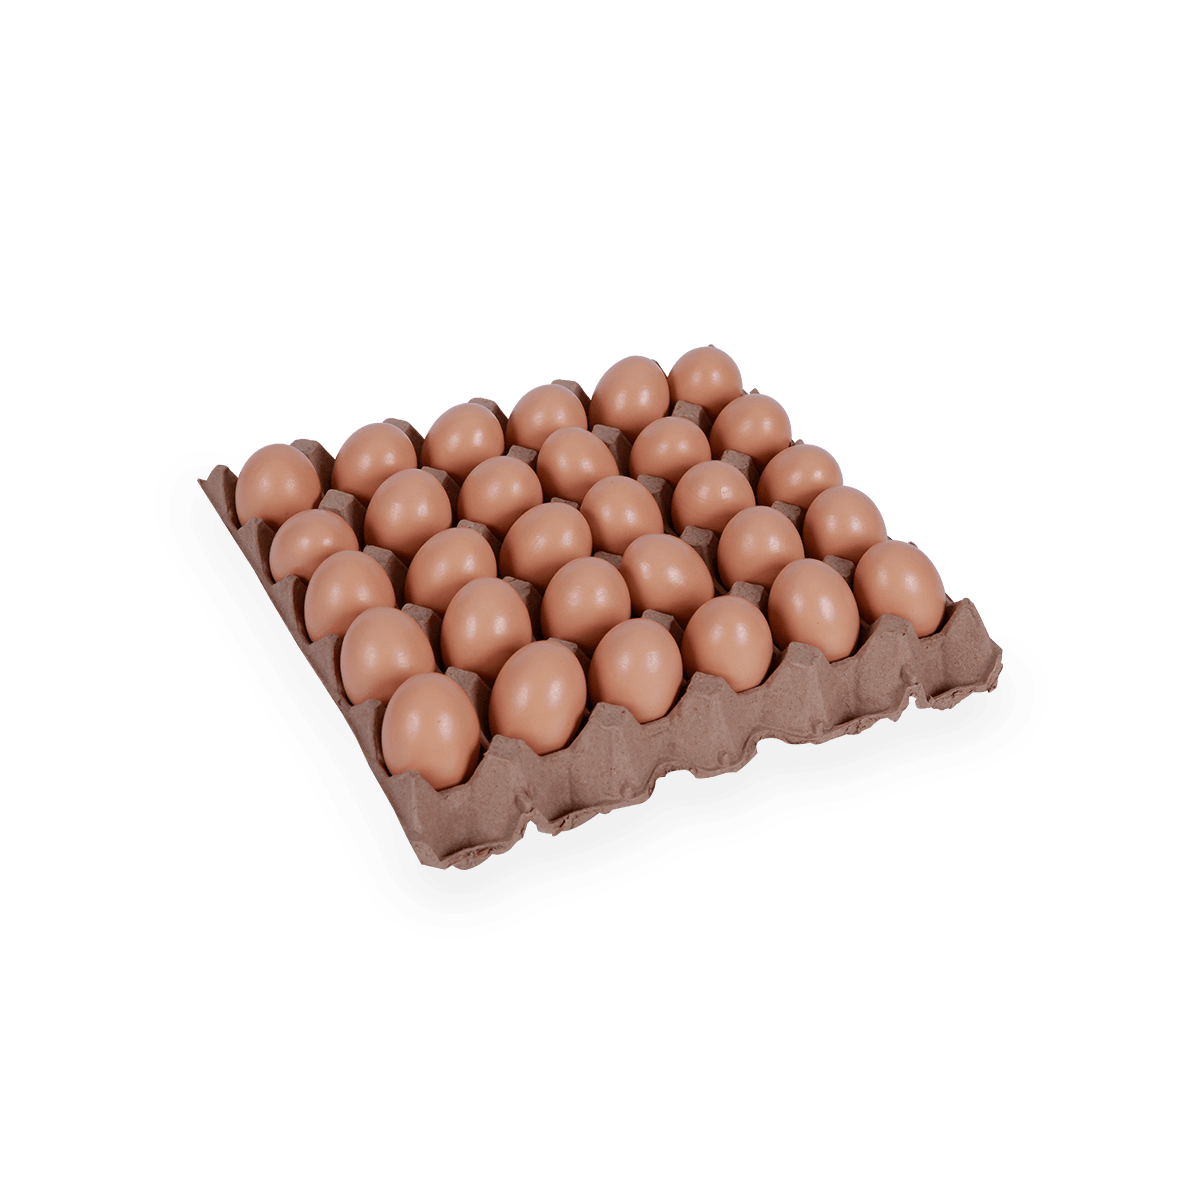 Plastic egg carton lid